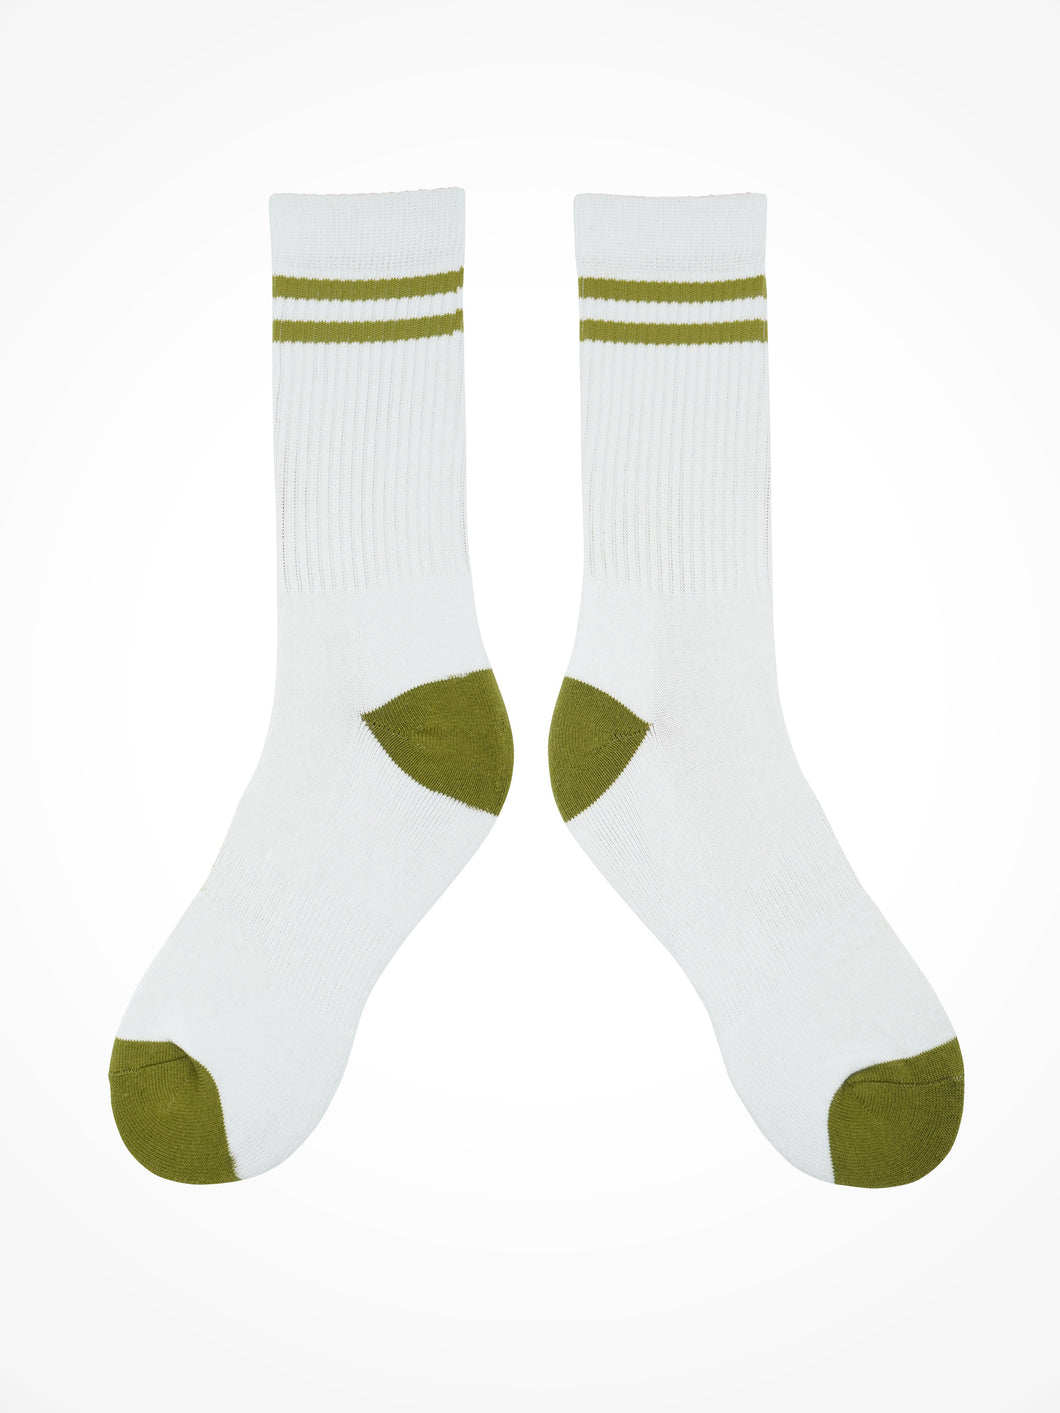 White and Green Socks